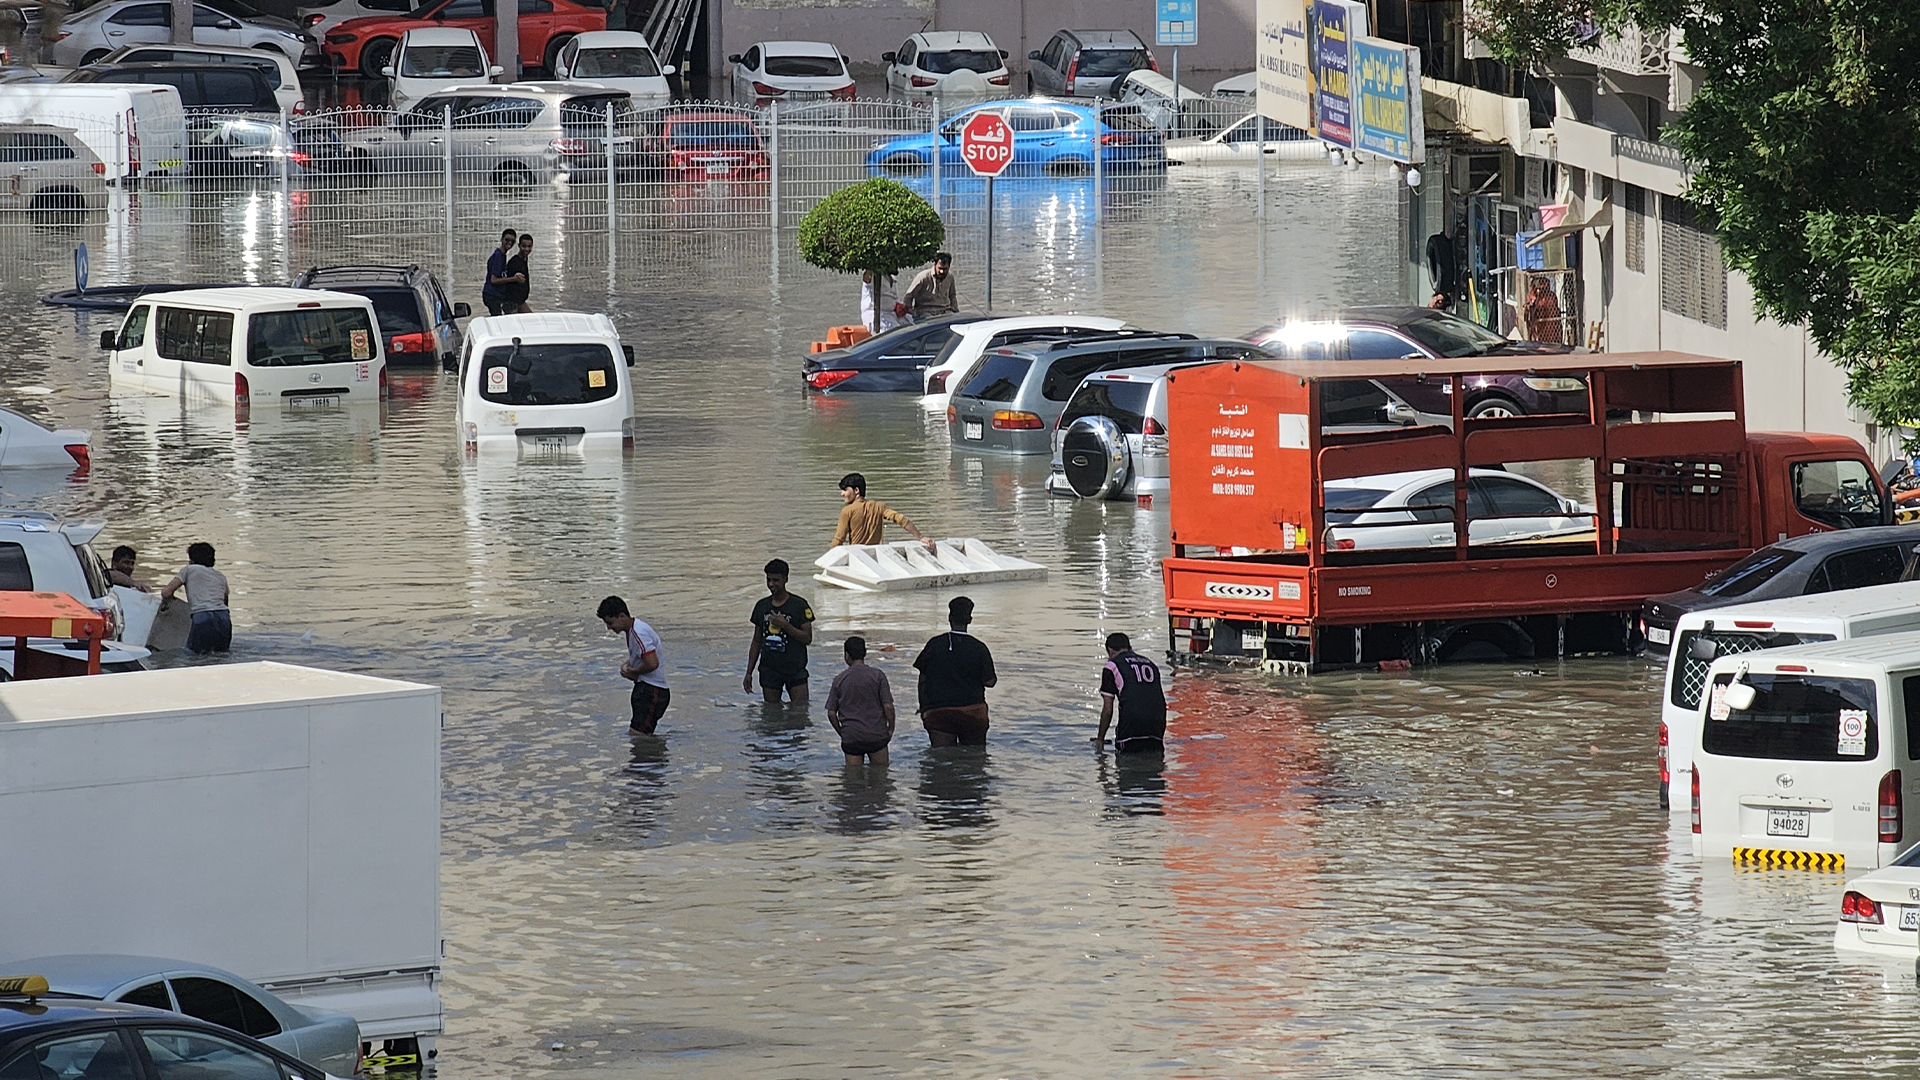 The scoop on UAEs artificial rain: Did cloud seeding drown Dubai? [Video]